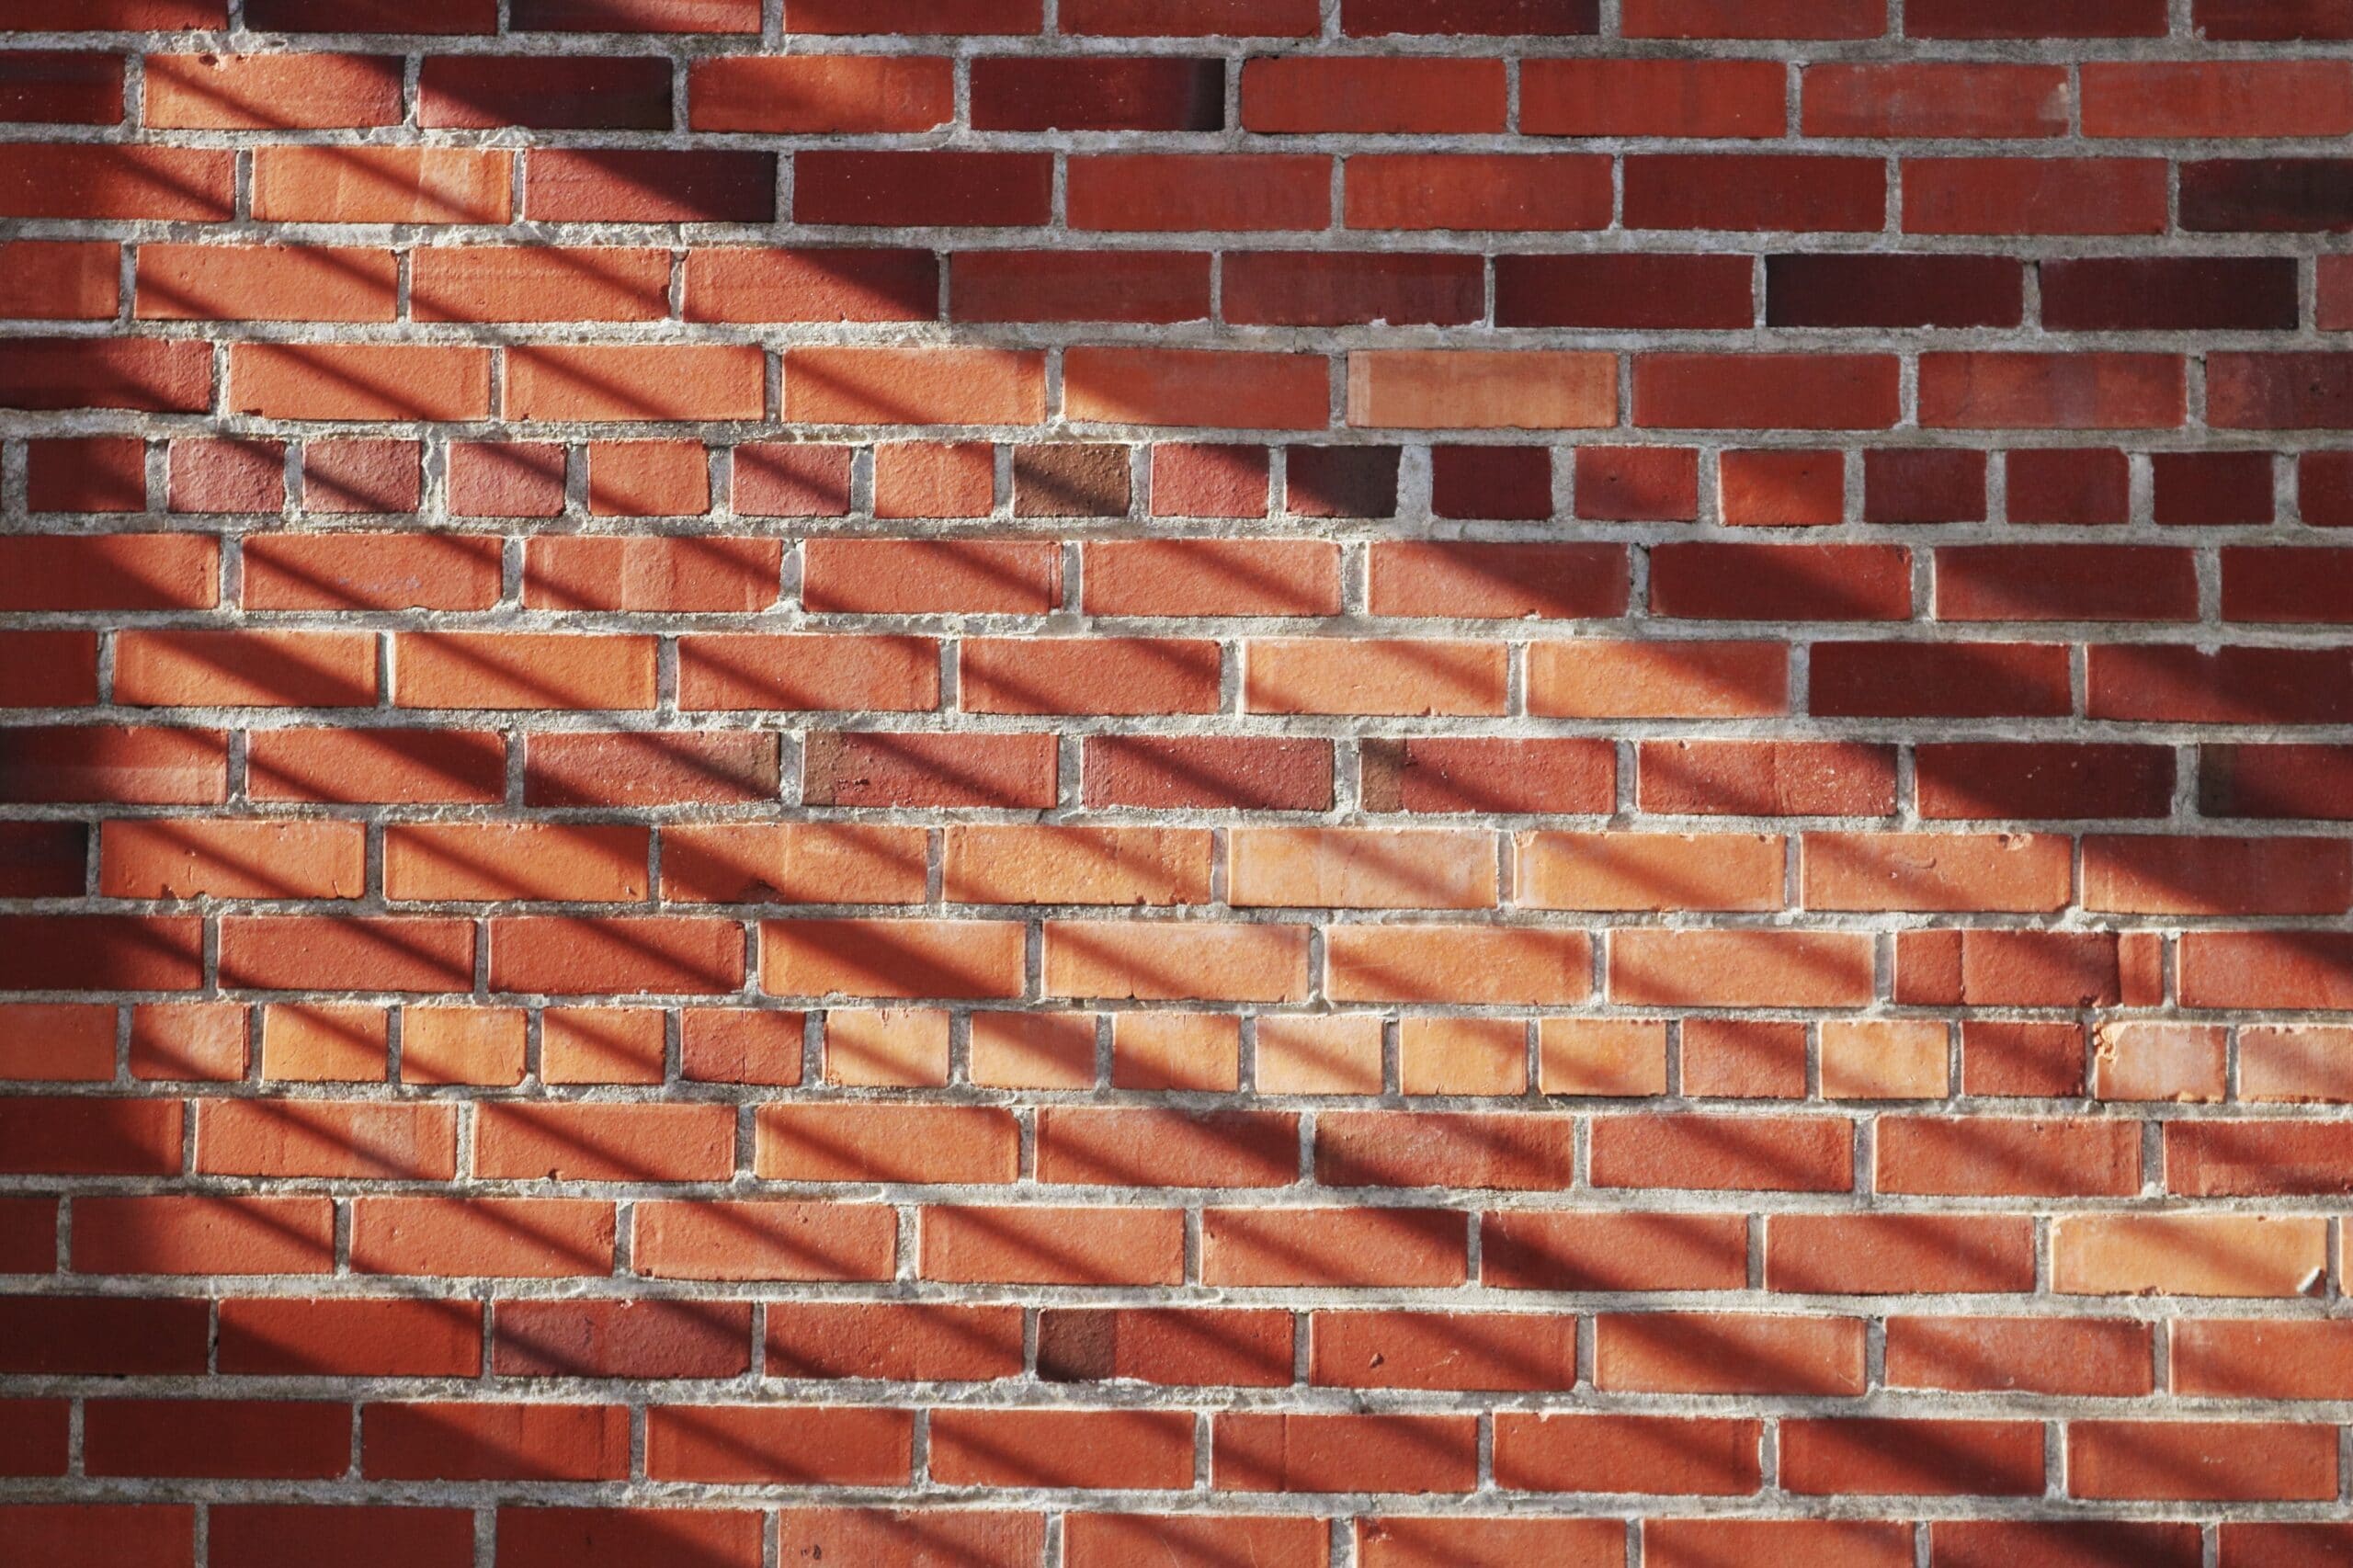 Brickwork services | A close-up of a brick wall